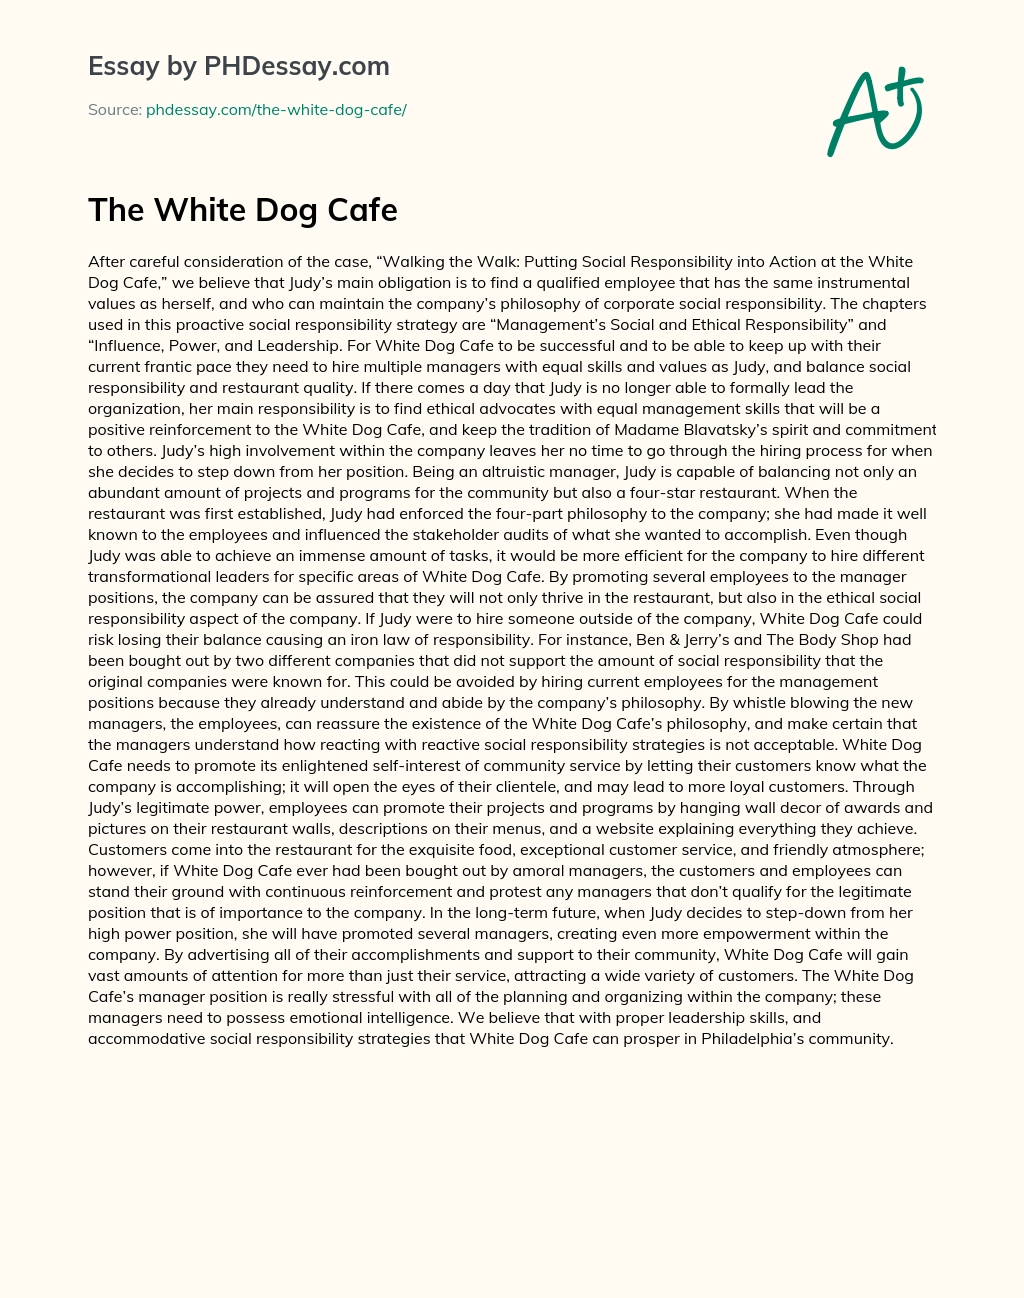 The White Dog Cafe essay